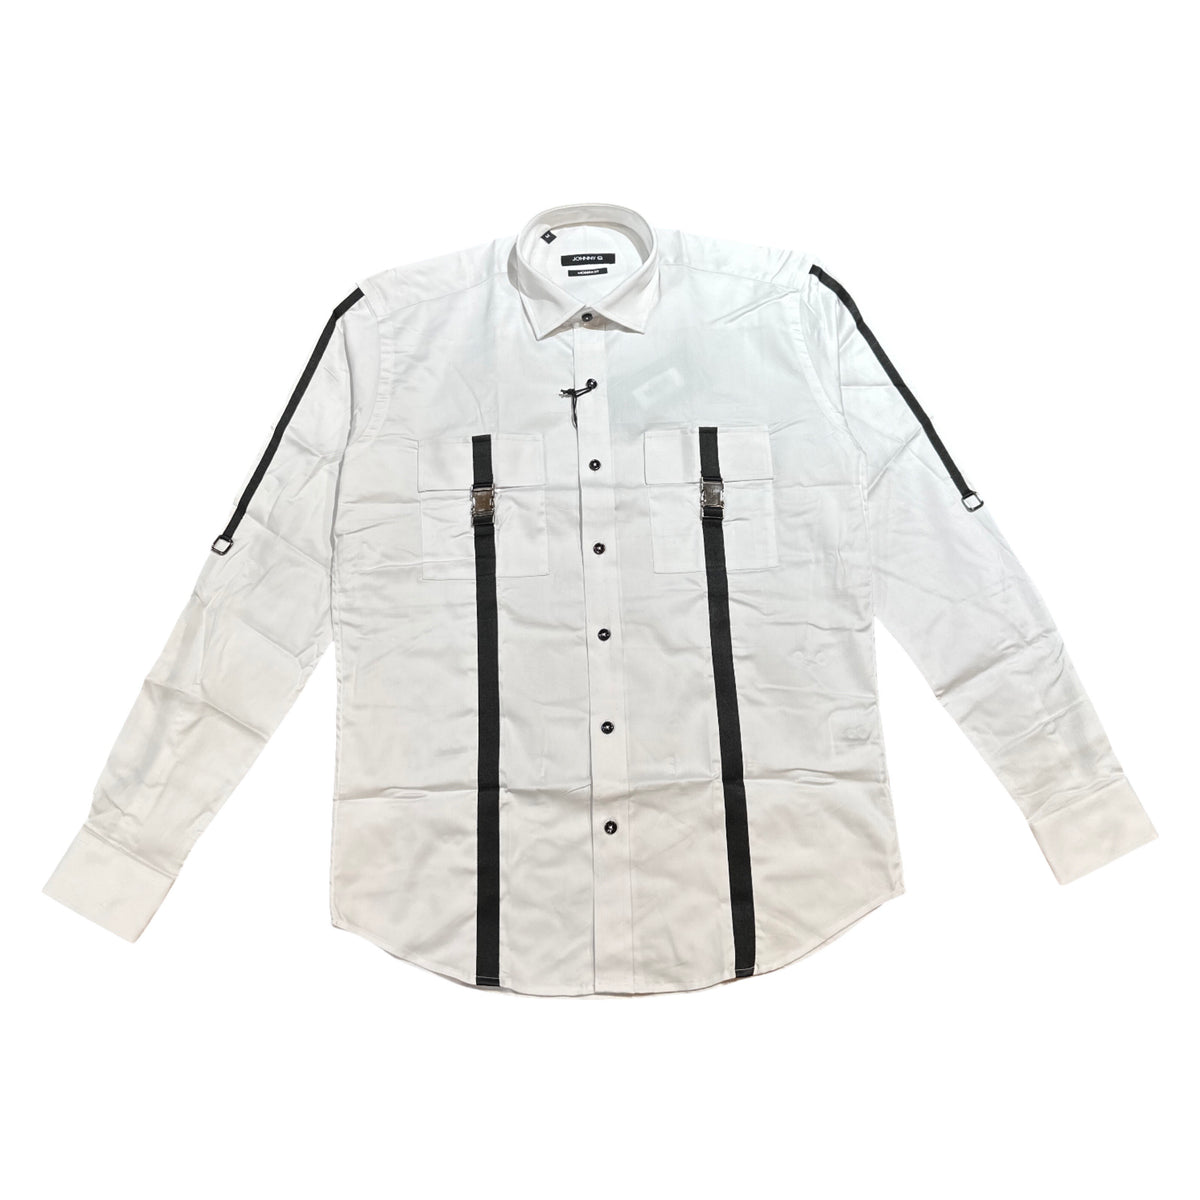 Johnny Q JQ 1002-D White Button Up Shirt